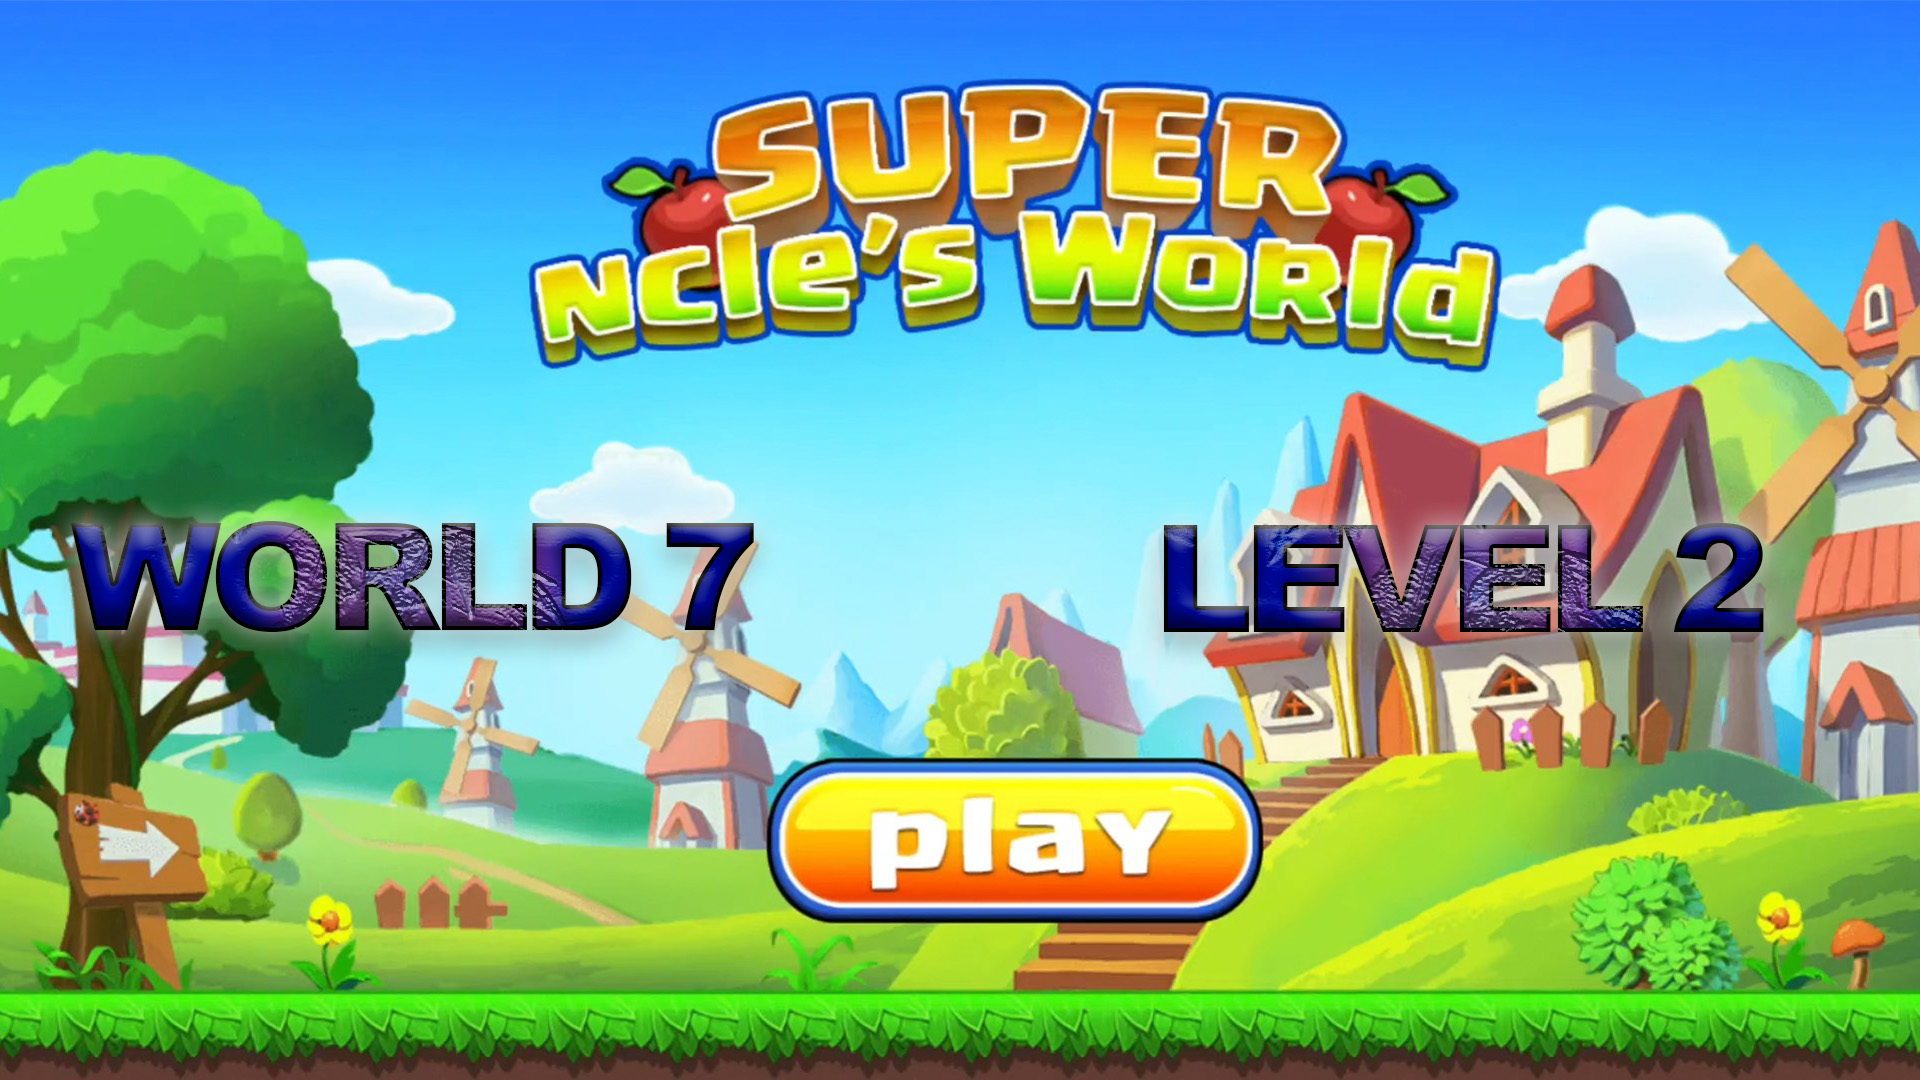 Super ncle's  World 7. Level 2.